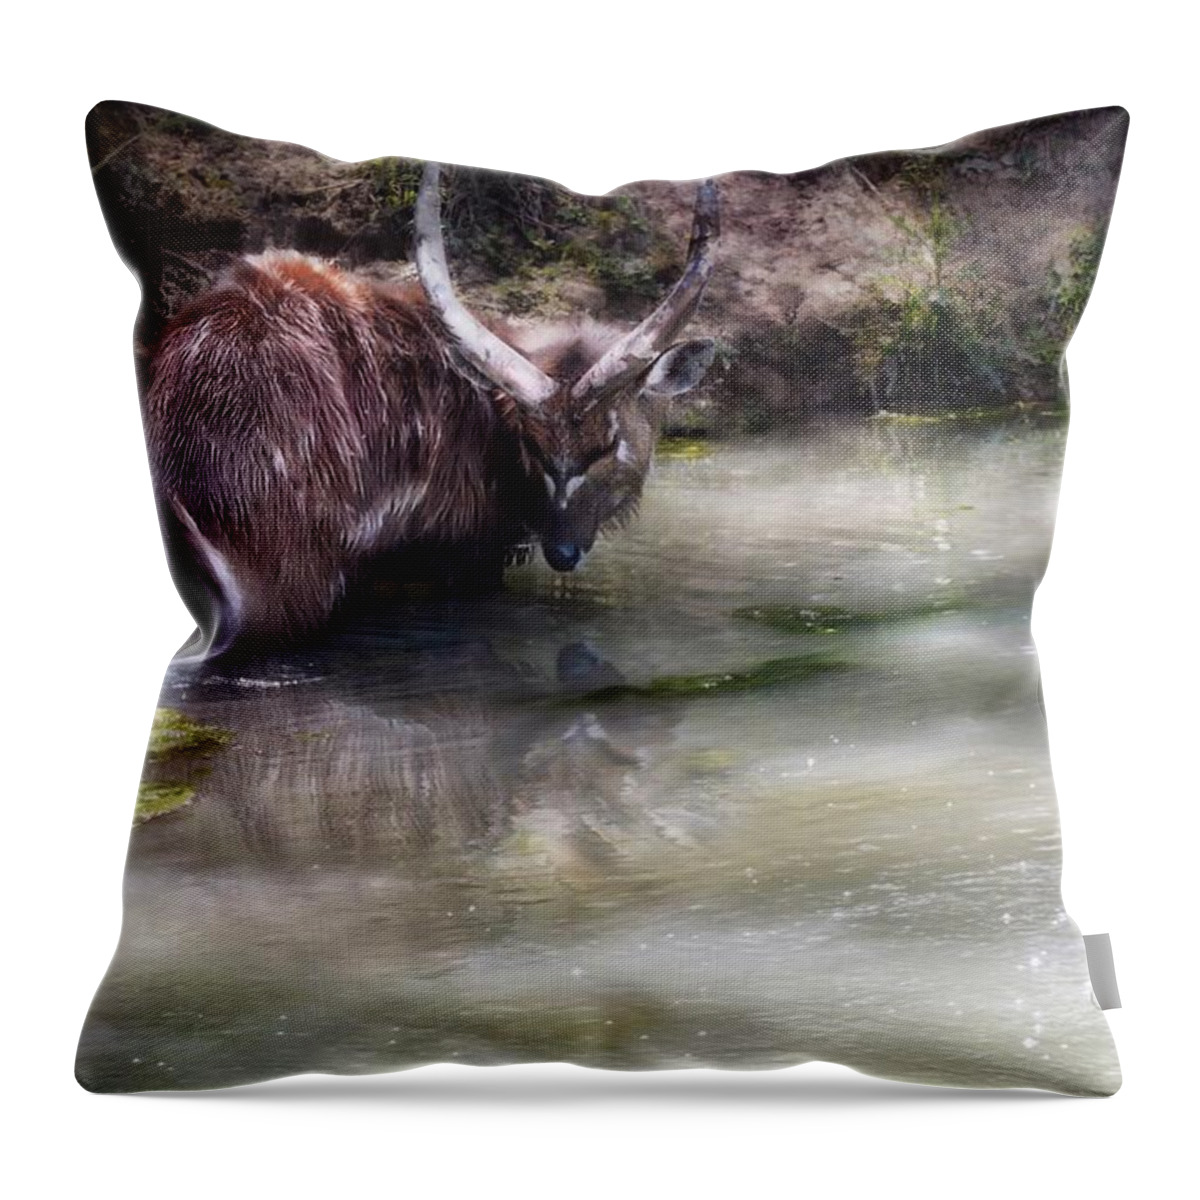 Sitatunga Throw Pillow featuring the digital art Sitatunga by Looking Glass Images